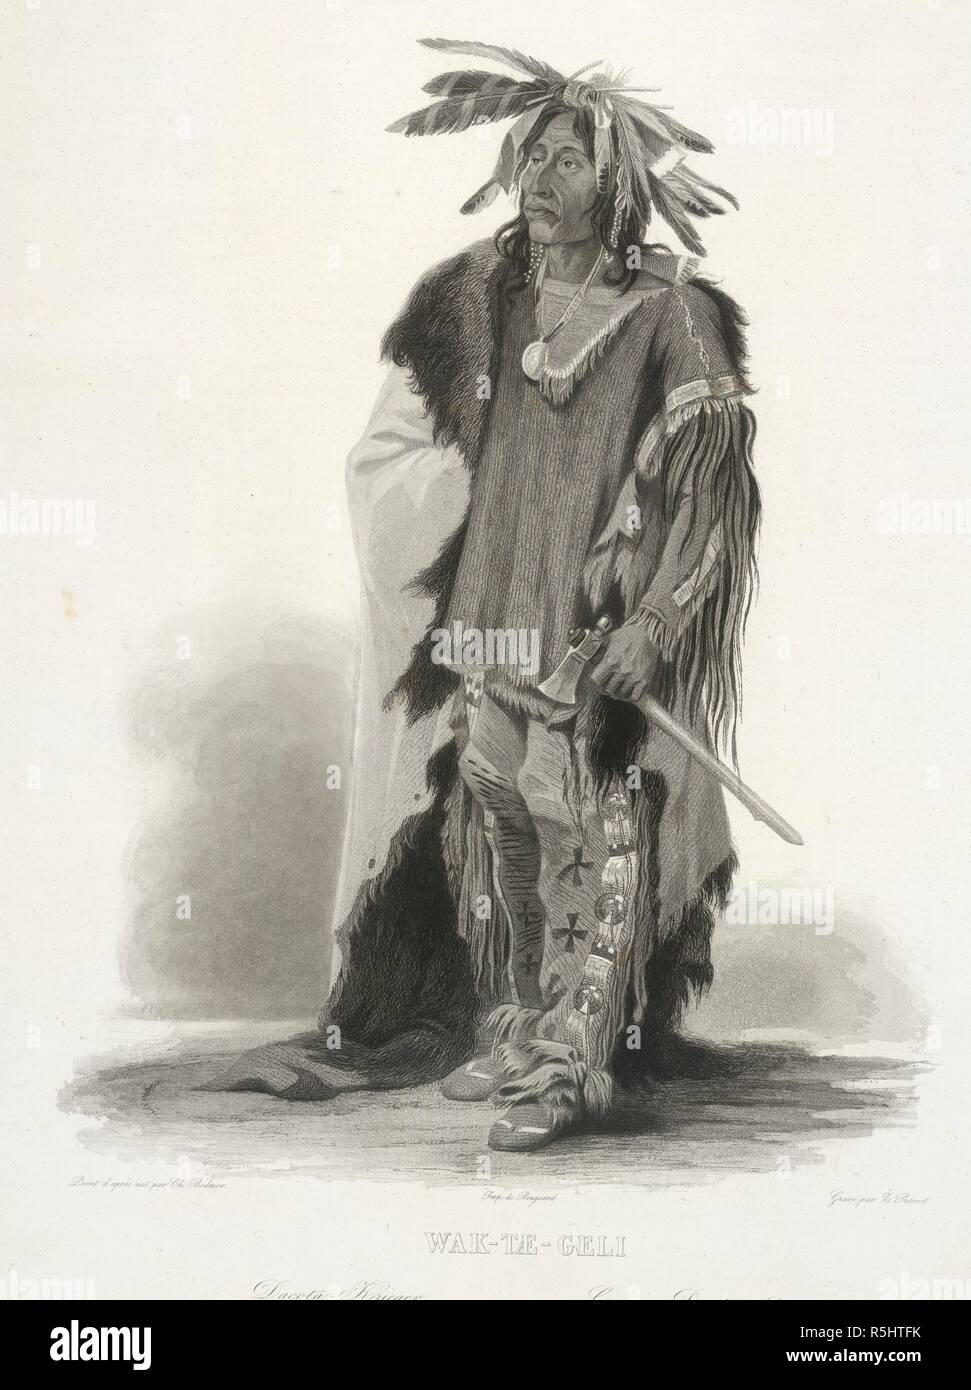 Wak-TÃ¦-Geli. A native American. Kupfer zu Prinz Maximilians von Wied Reise  durch N-America. London; Coblenz : Ackermann & Co., J. HÃ¶lscher, [1841].  Source: 1785.b.18, page 8 Stock Photo - Alamy